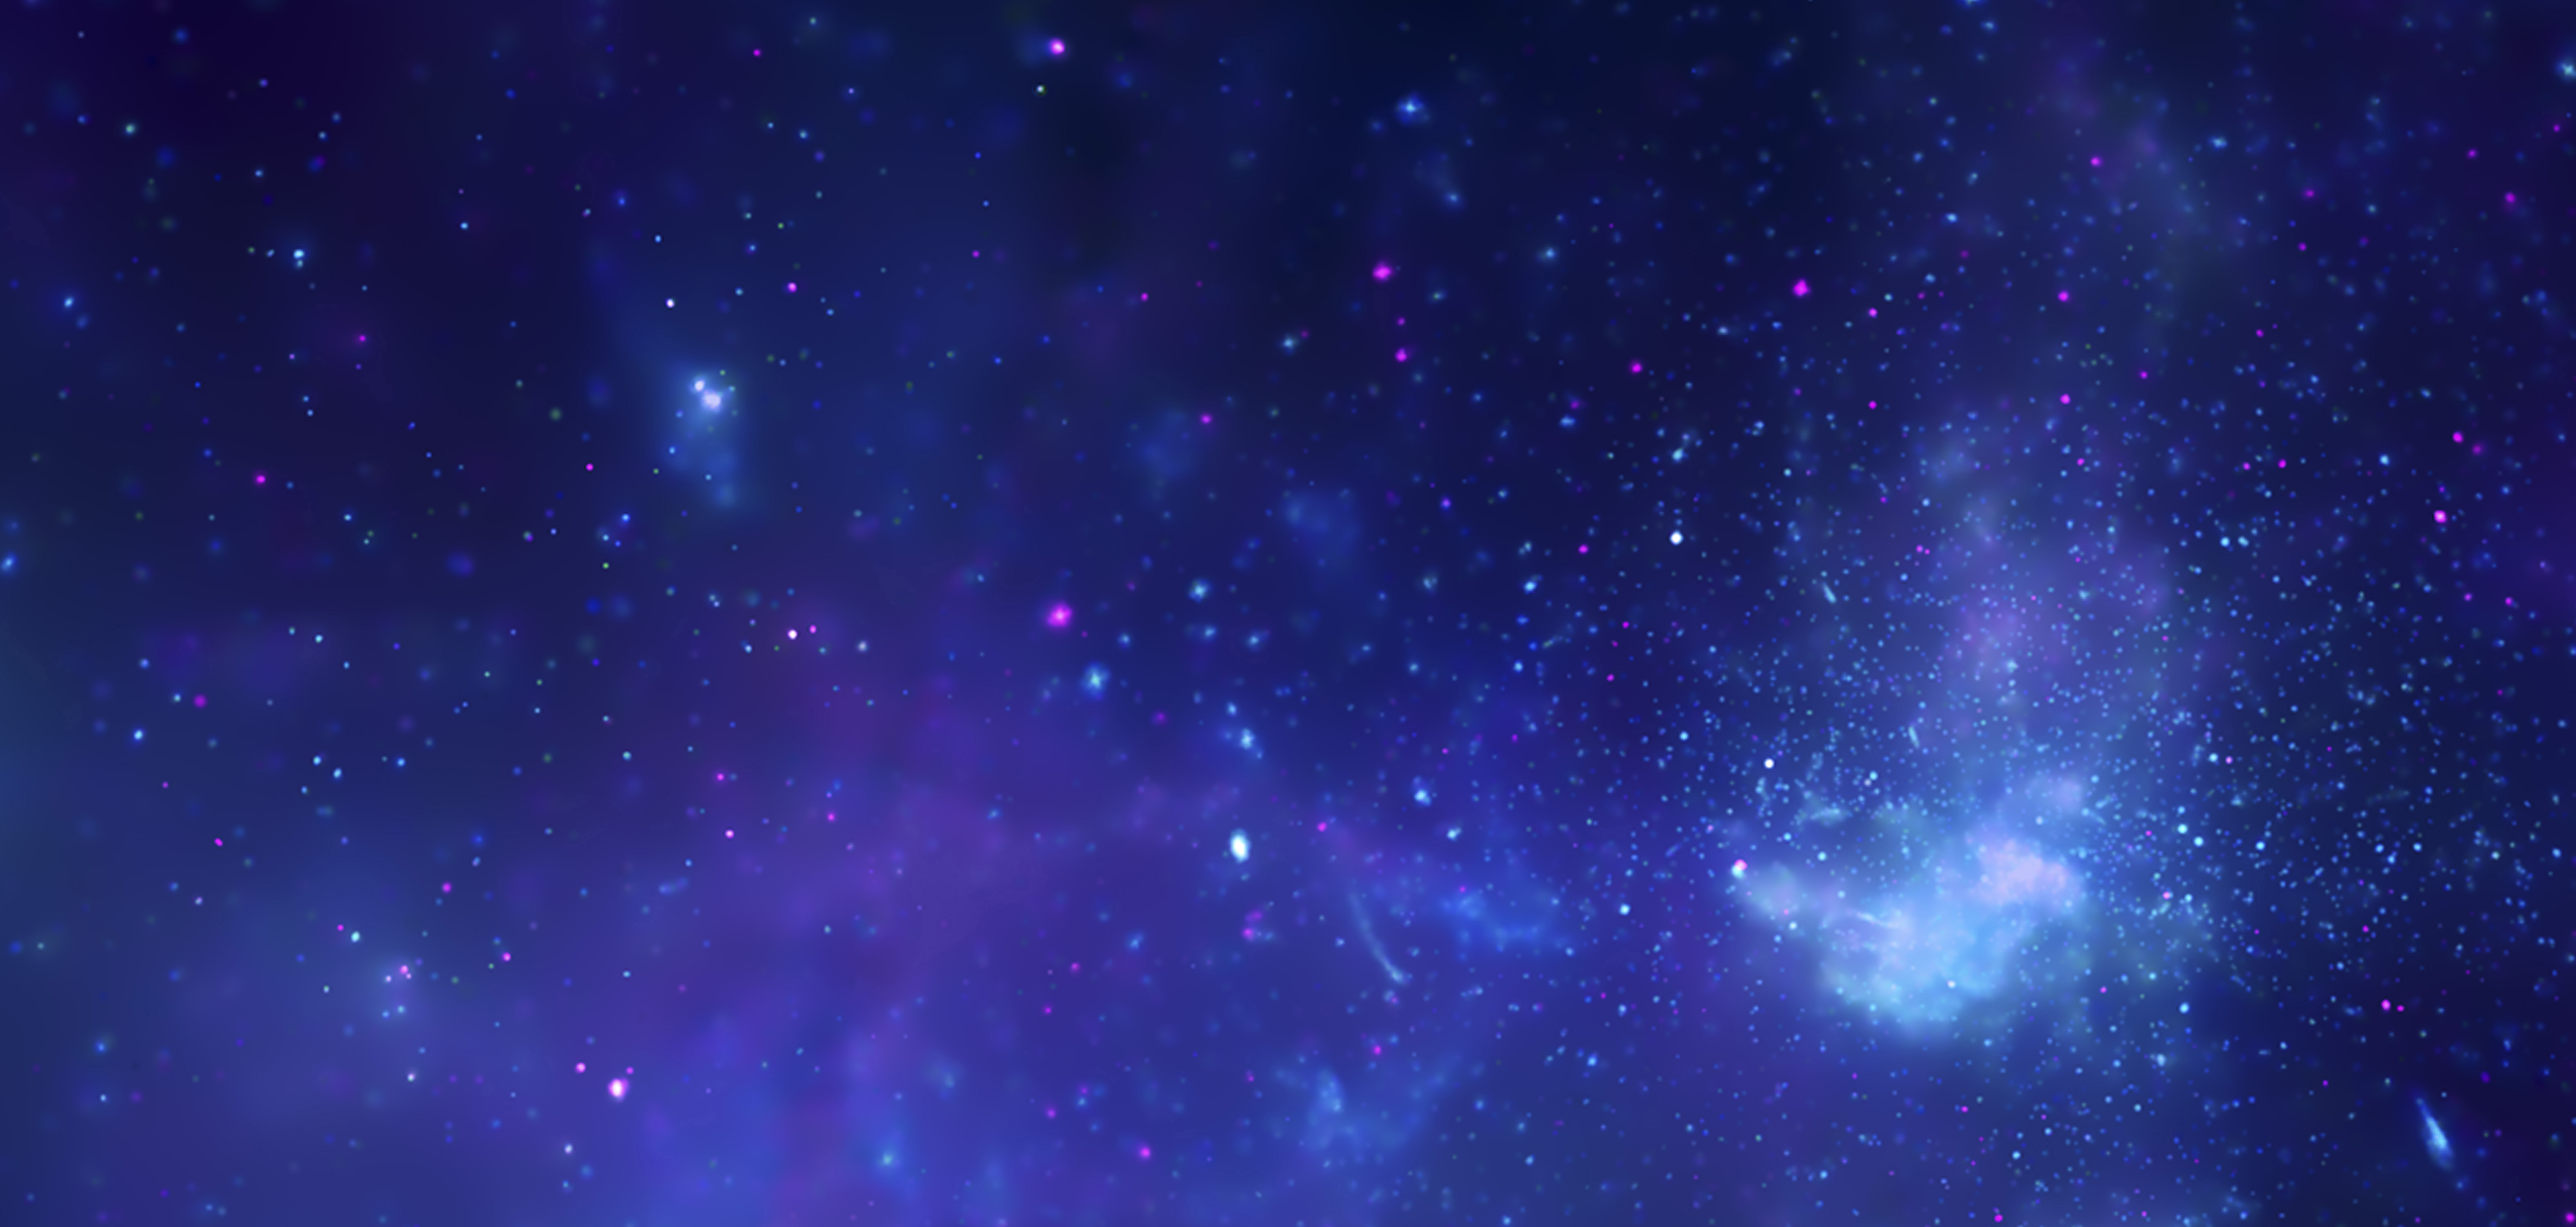 Center_of_the_Milky_Way_Galaxy_III_Chandra_X_ray.jpg